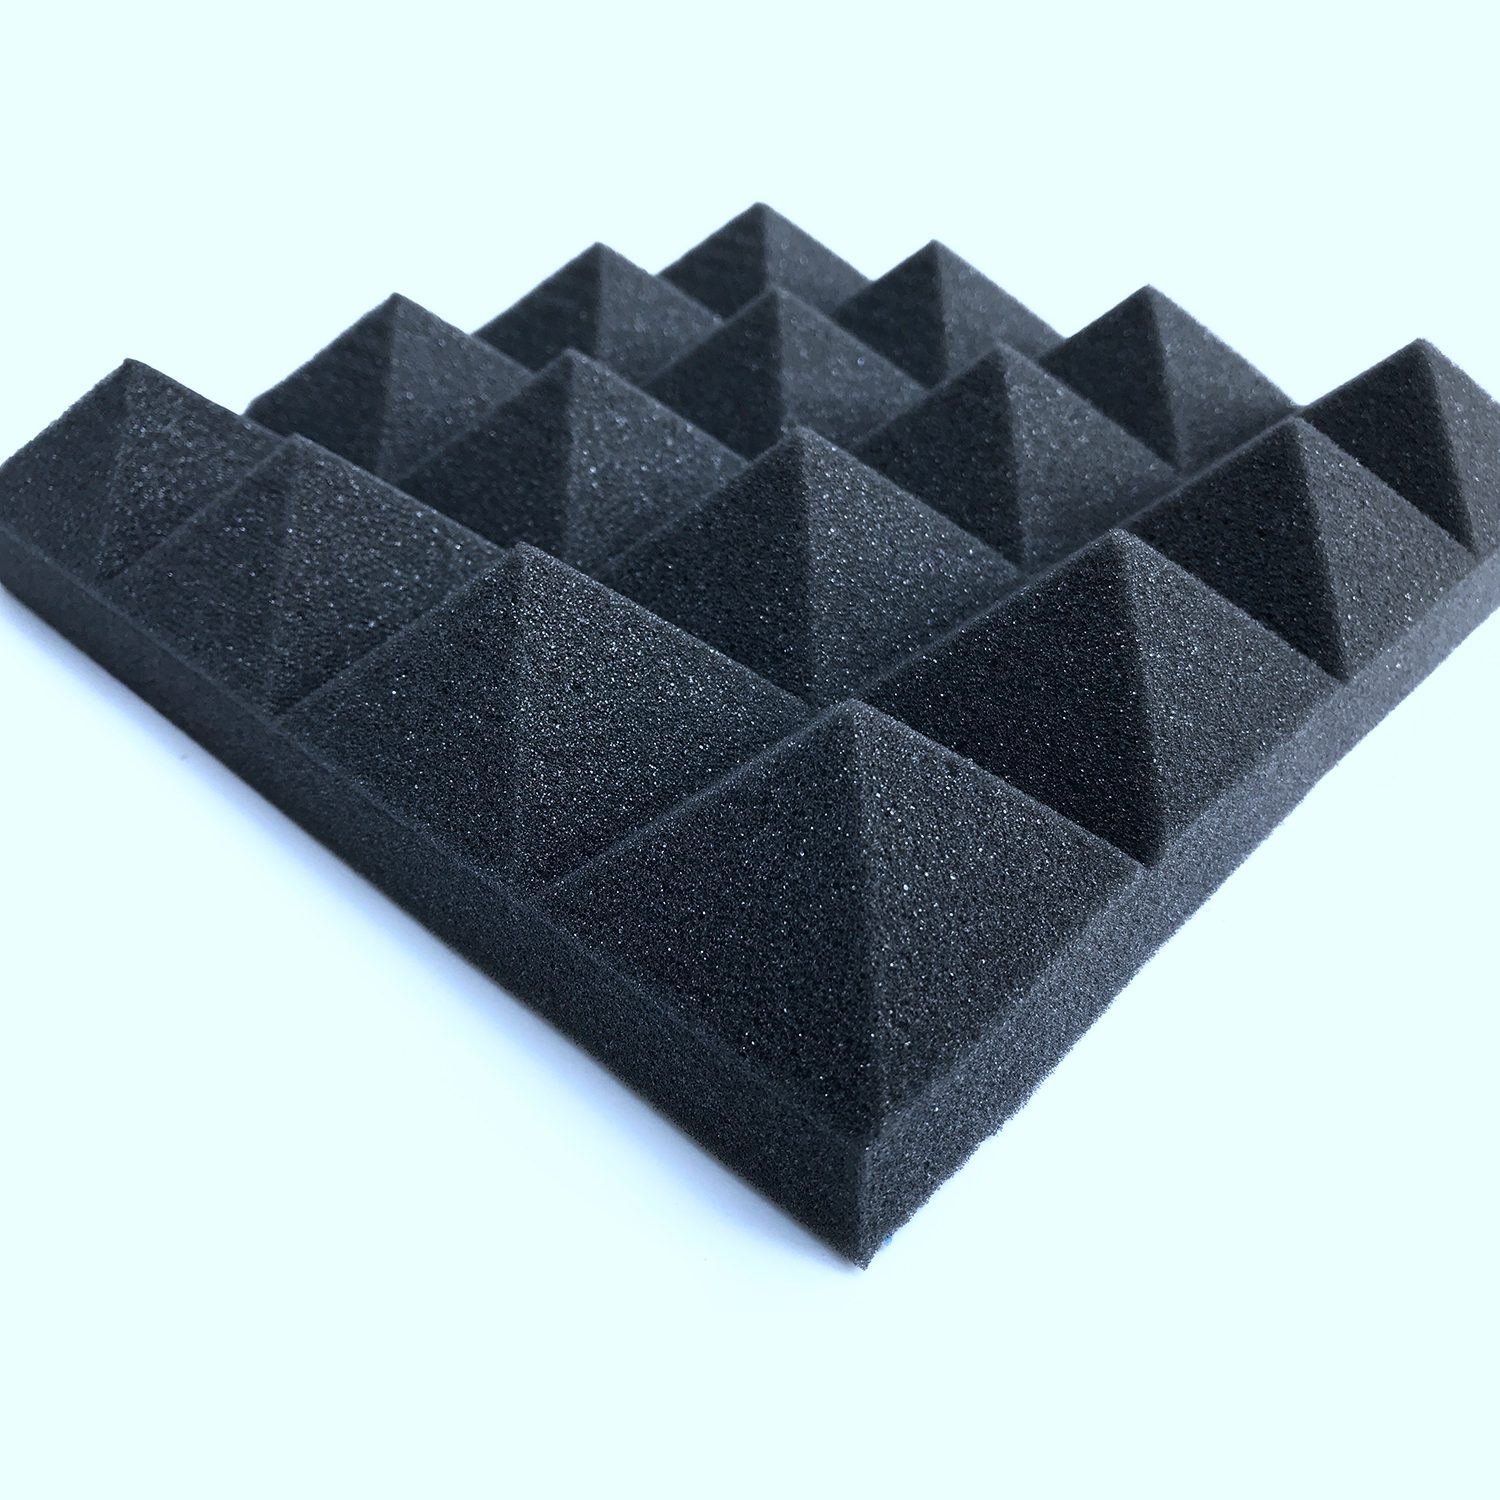 Acoustic Foam Panels Wall Soundproofing (12 pcs)